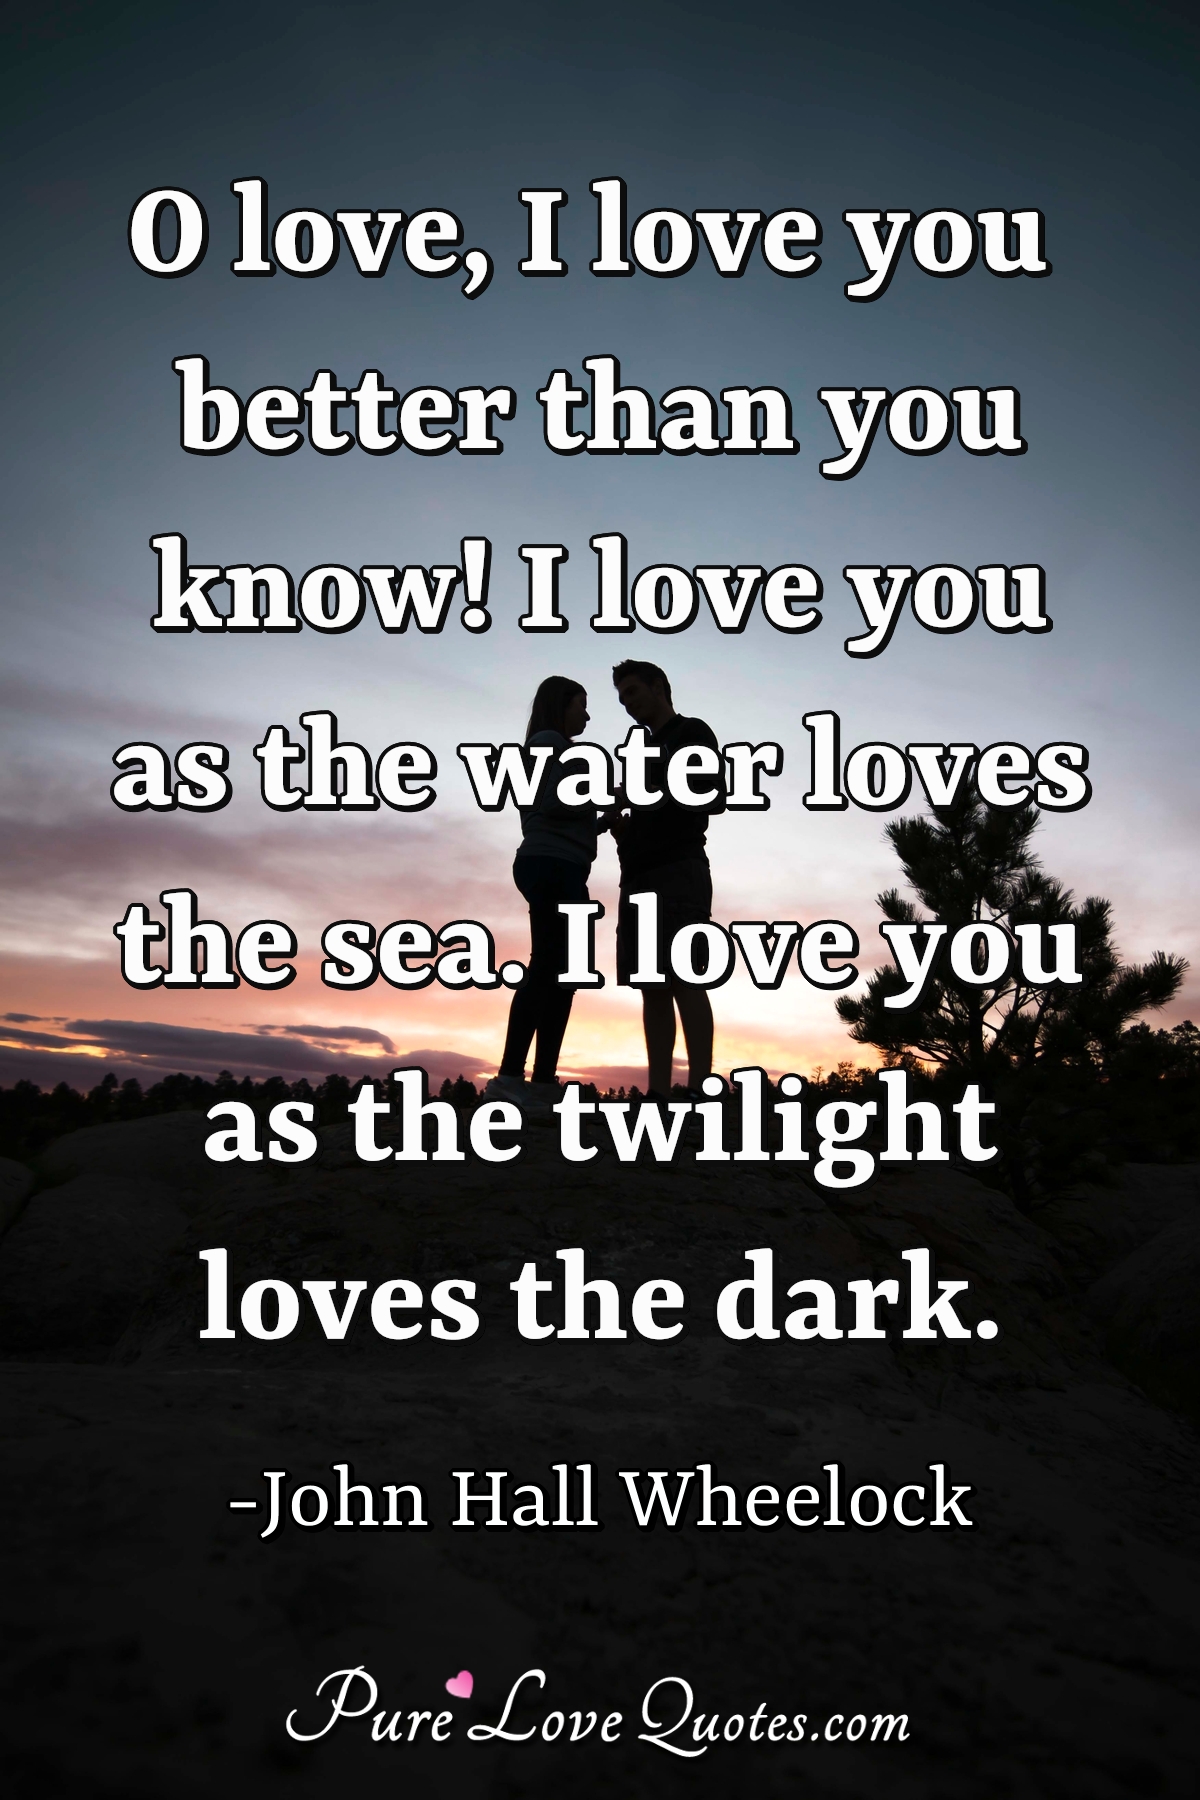 O love, I love you better than you know!<br/>
I love you as the water loves the sea.<br/>
I love you as the twilight loves the dark. - John Hall Wheelock